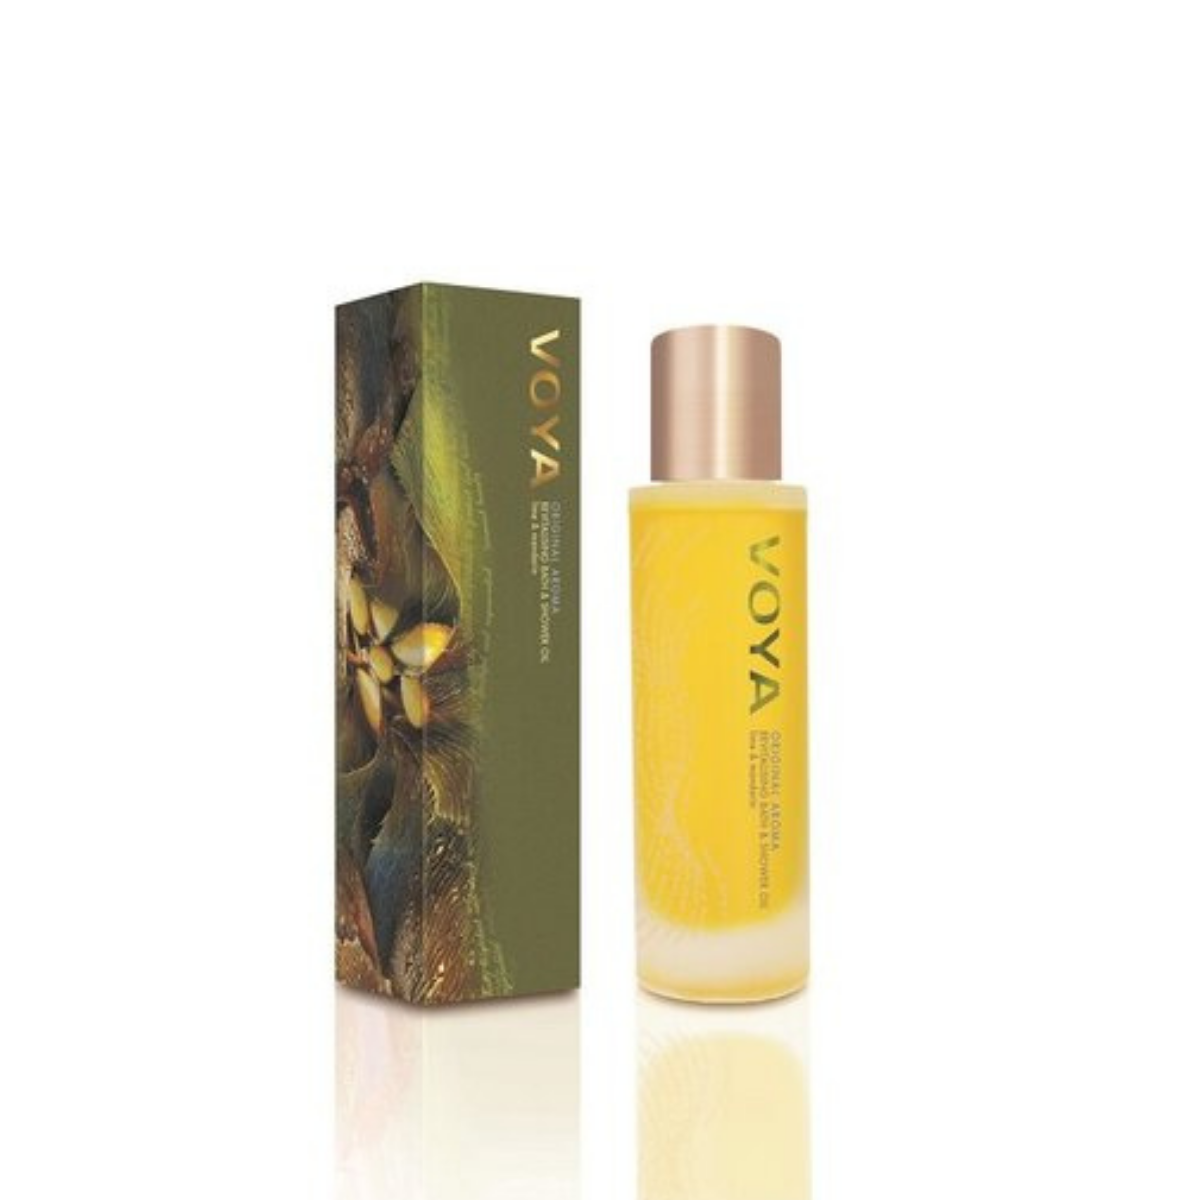 VOYA Original Aroma Revitalising Bath & Shower Oil